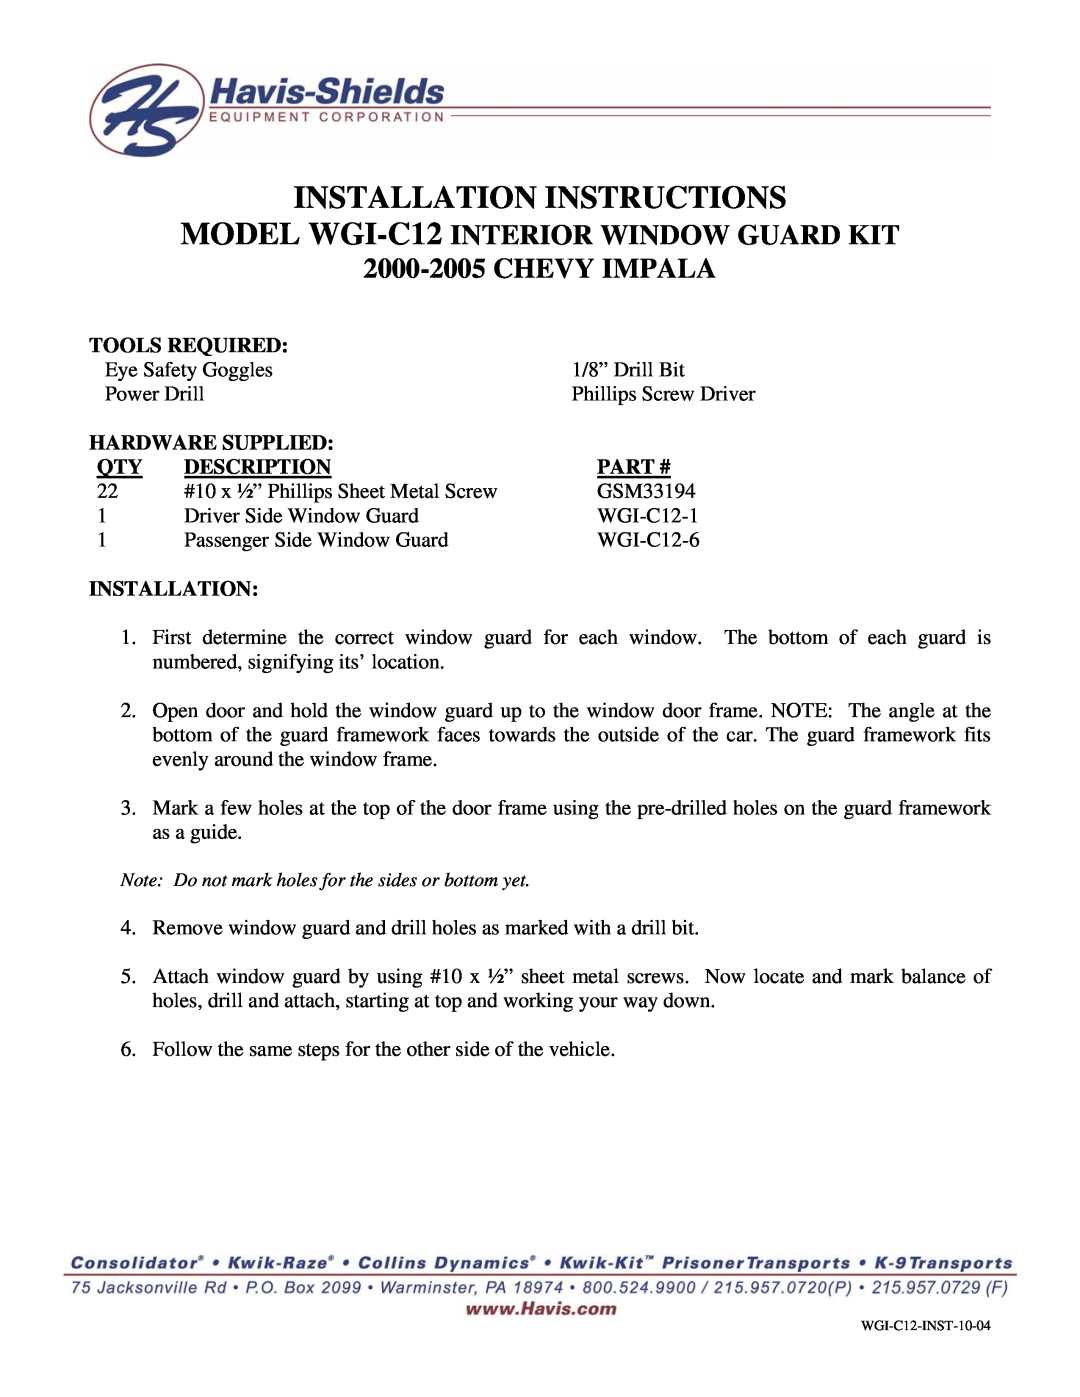 Havis-Shields installation instructions Installation Instructions, MODEL WGI-C12 INTERIOR WINDOW GUARD KIT, Description 